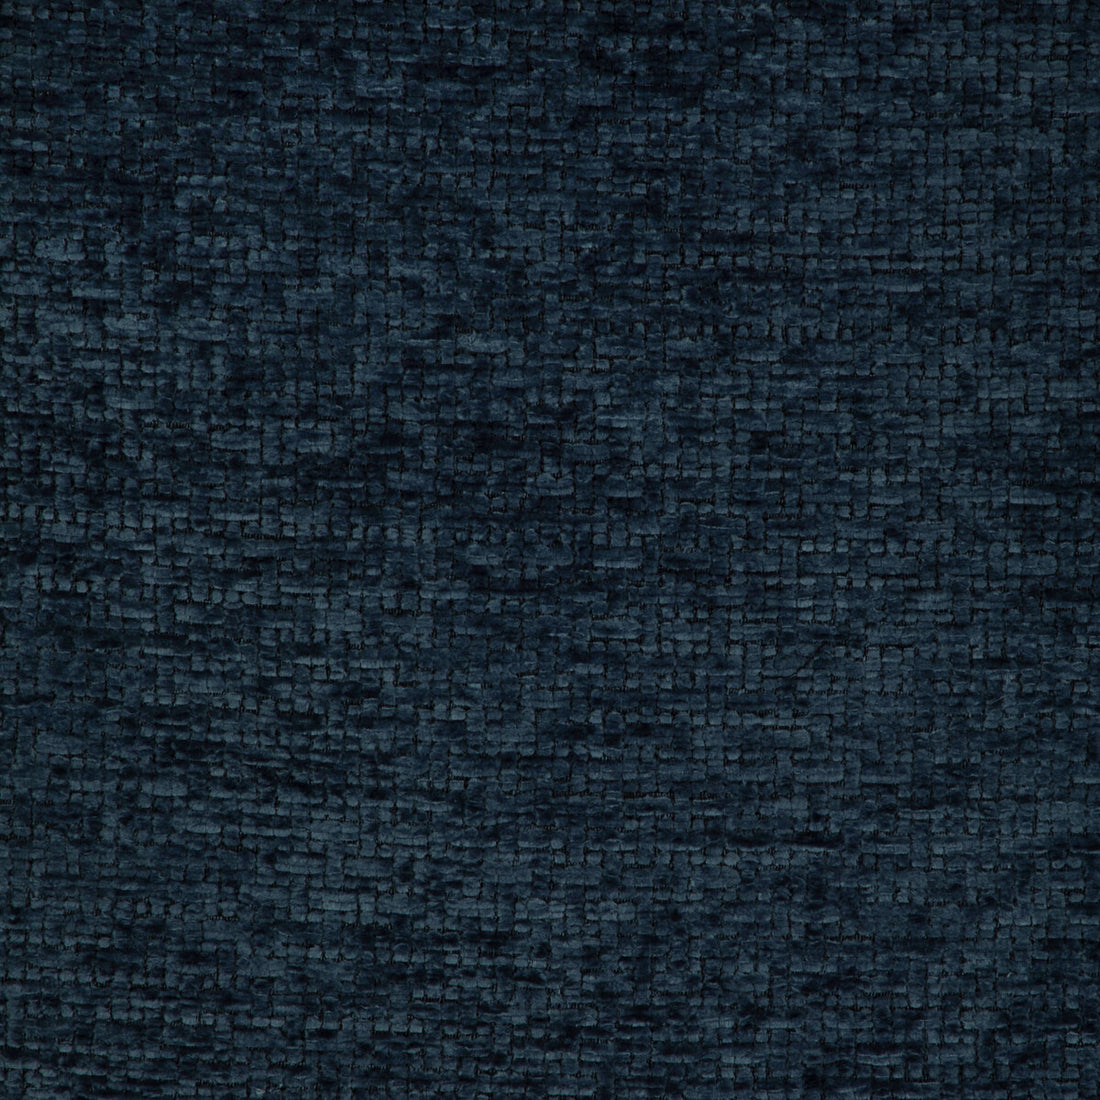 Kravet Smart fabric in 36993-5 color - pattern 36993.5.0 - by Kravet Smart in the Performance Kravetarmor collection